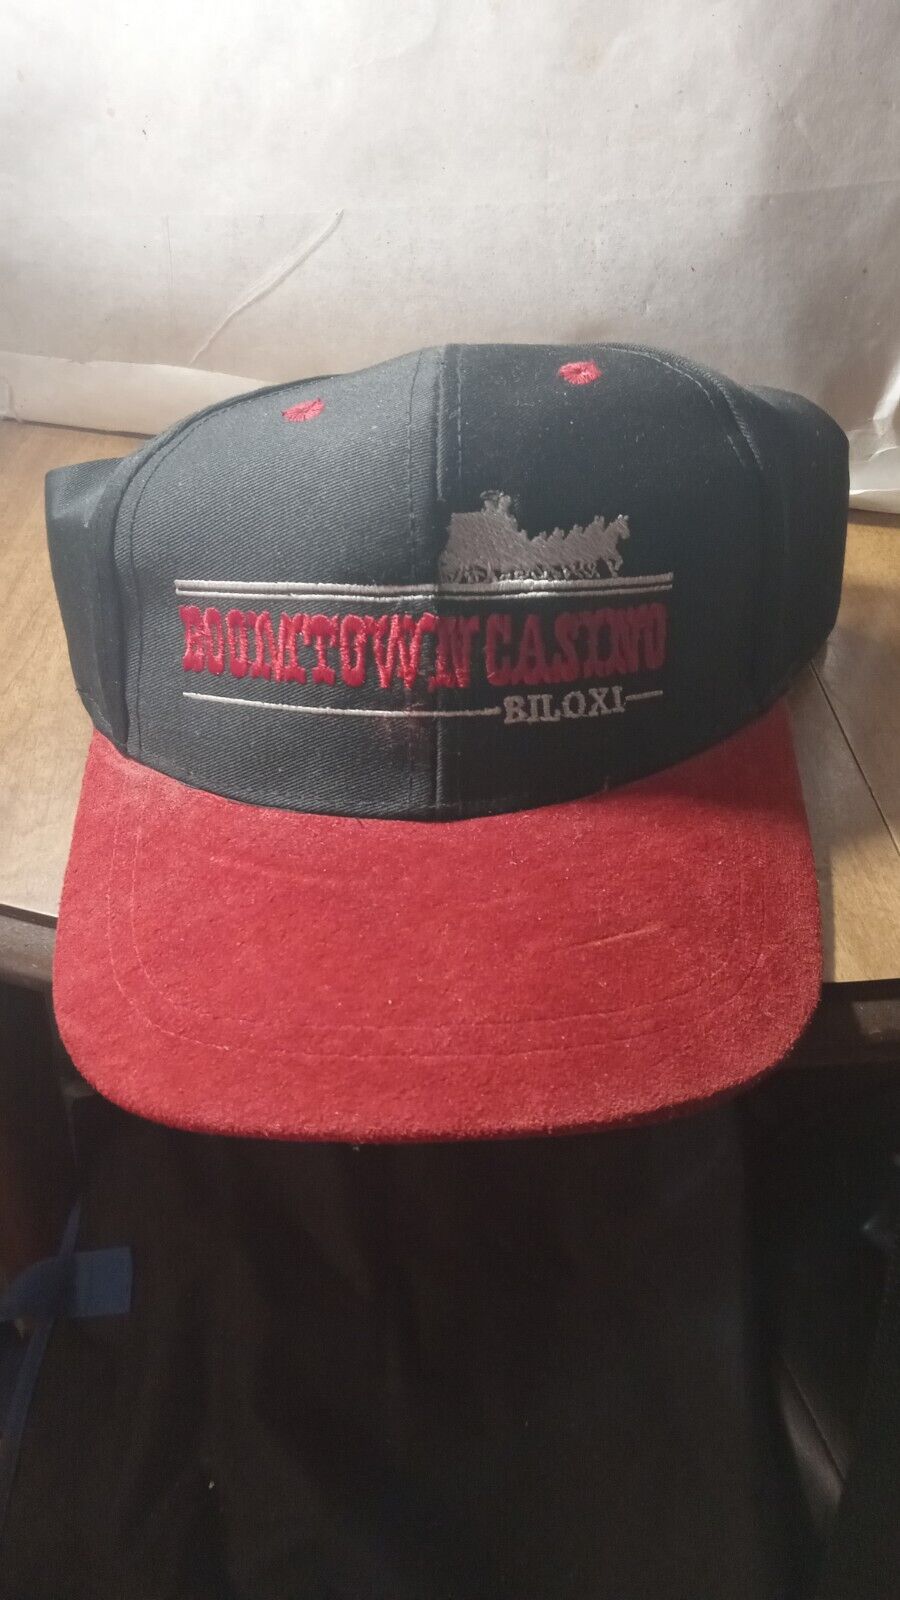 Hometown Casino Biloxi, Mississippi Adjustable Hat Cap